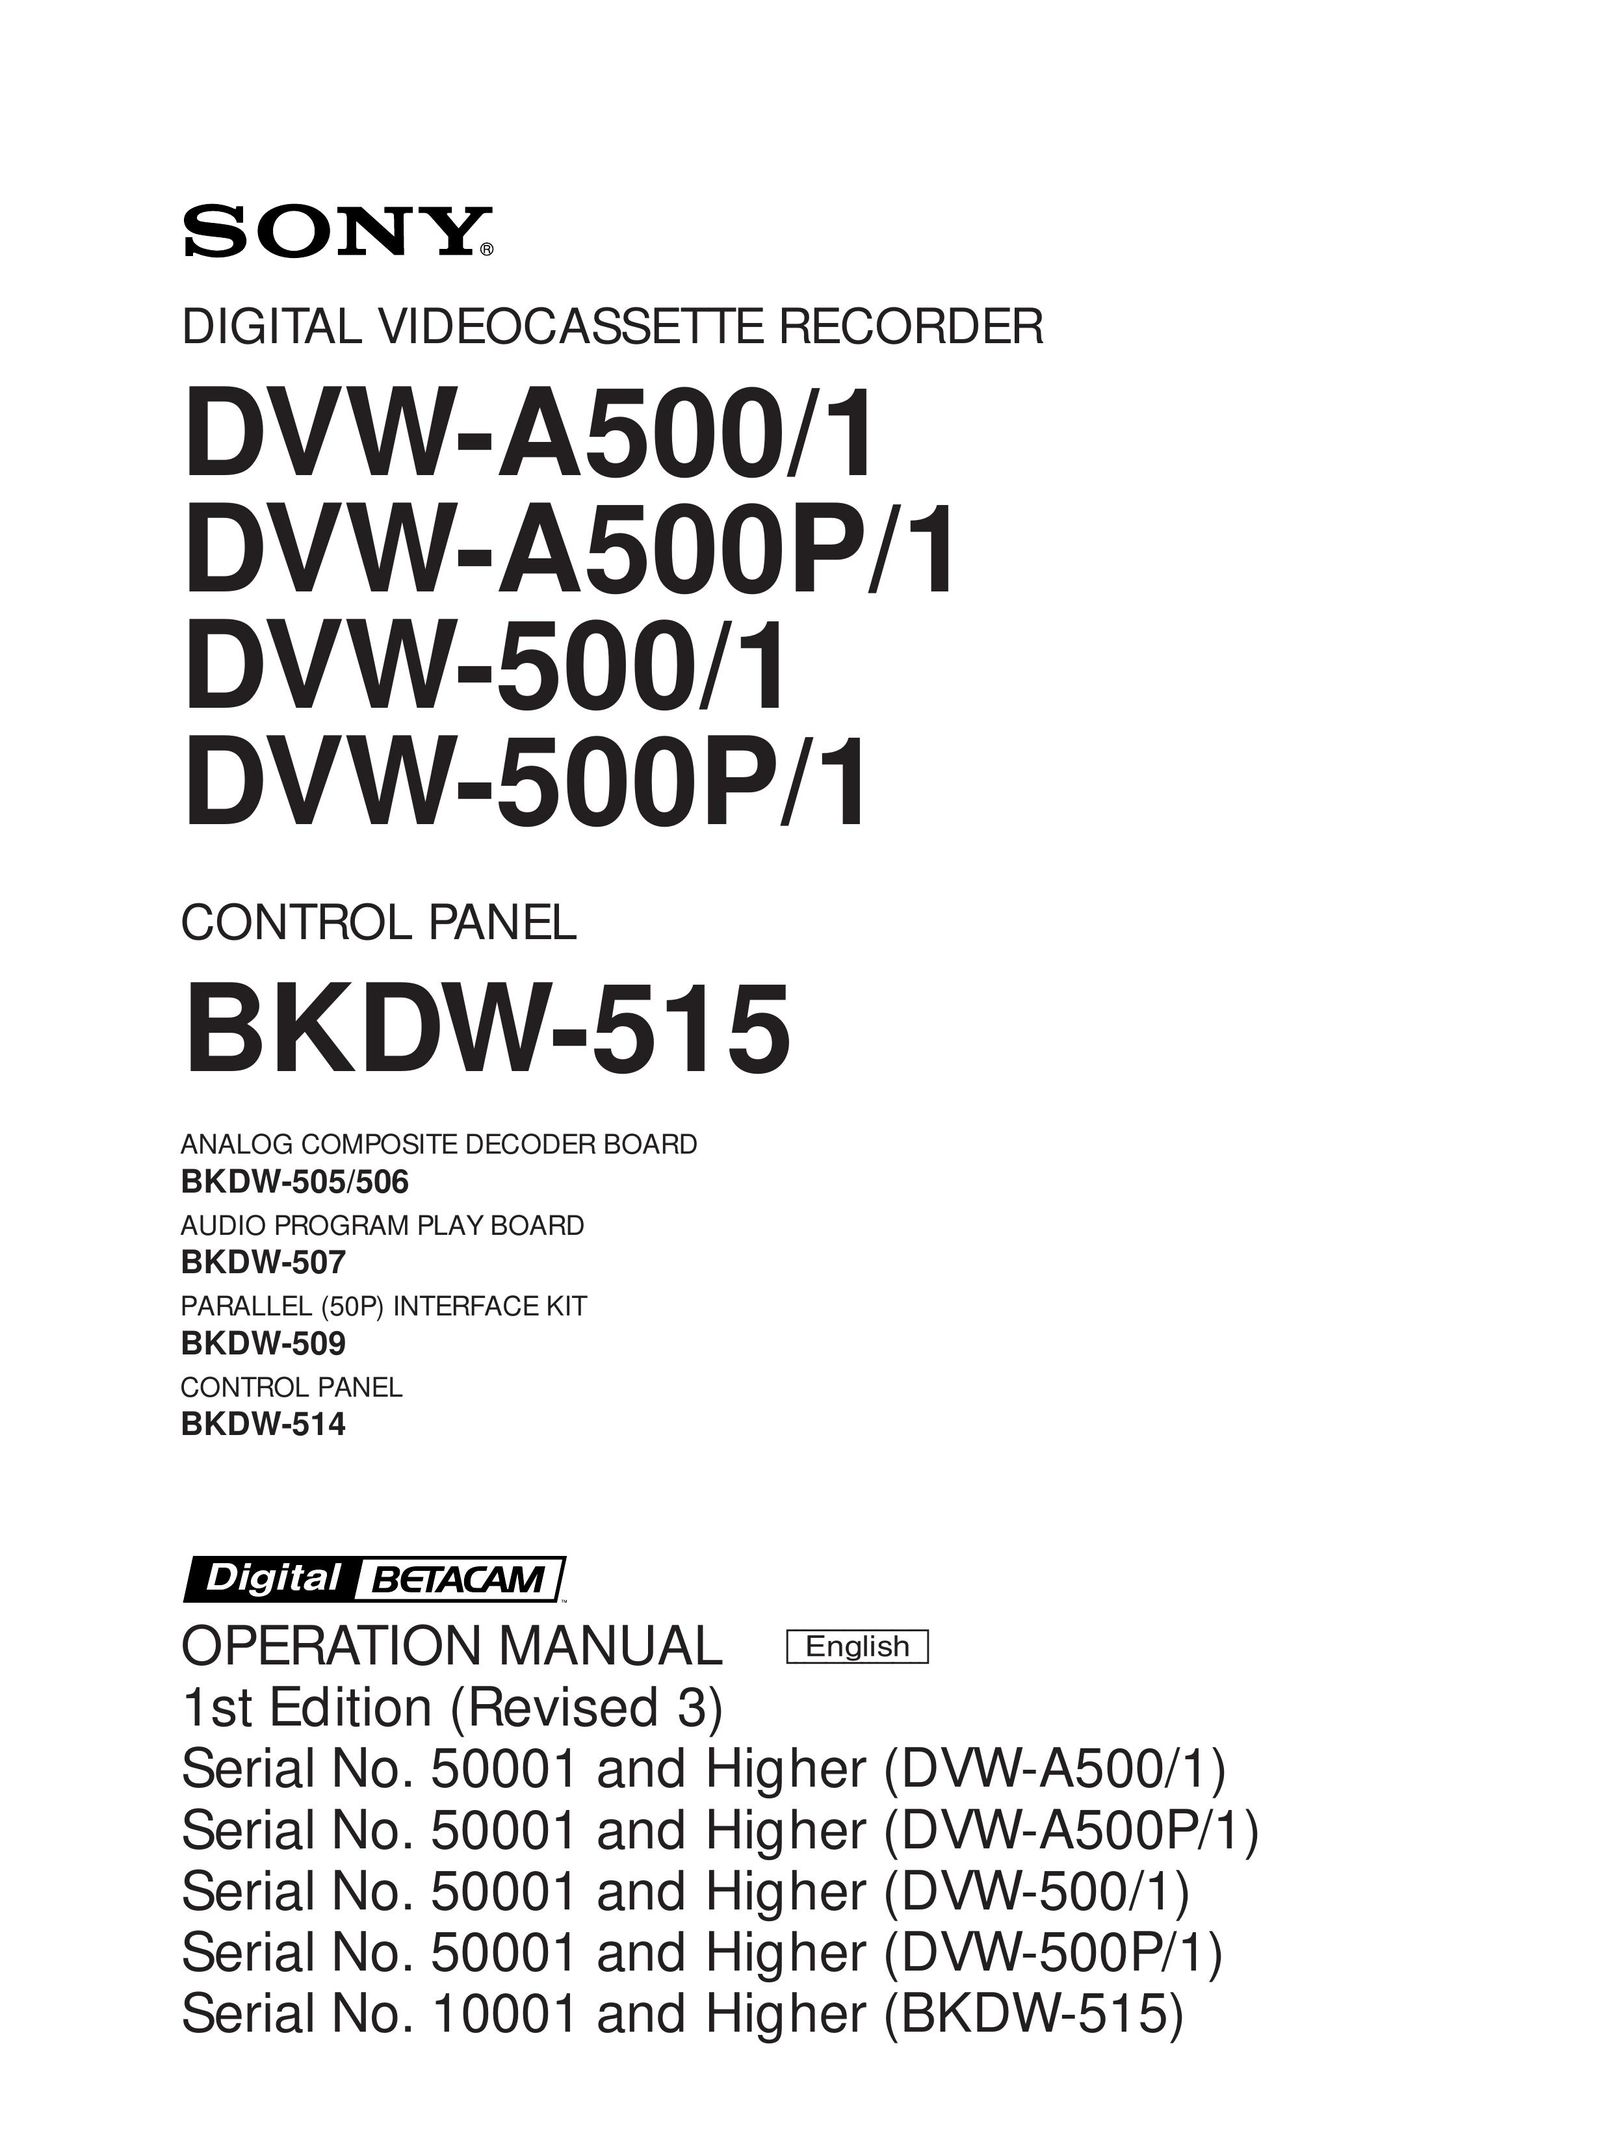 Sony BKDW-507 DVR User Manual